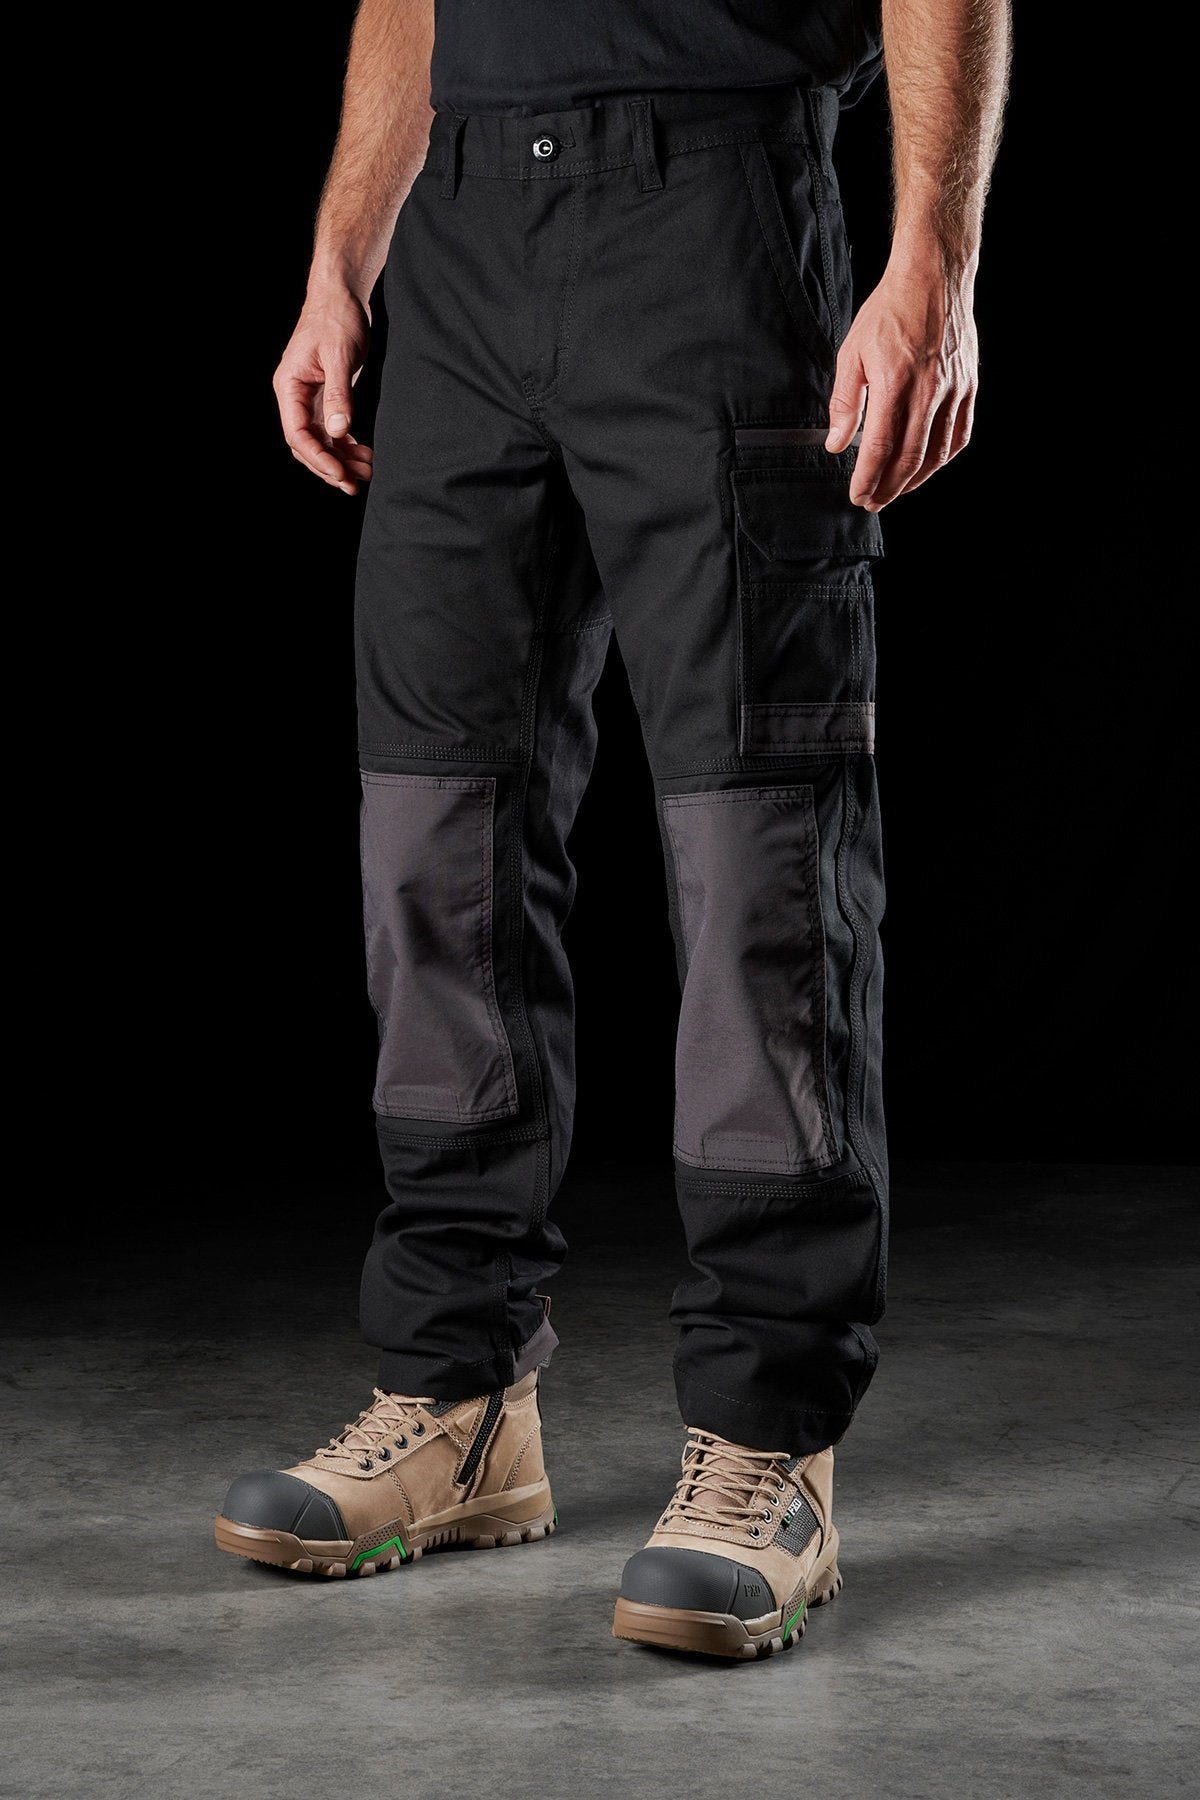 FXD Mens Original Work Pants With Knee Pads - Work Clobber Bunbury